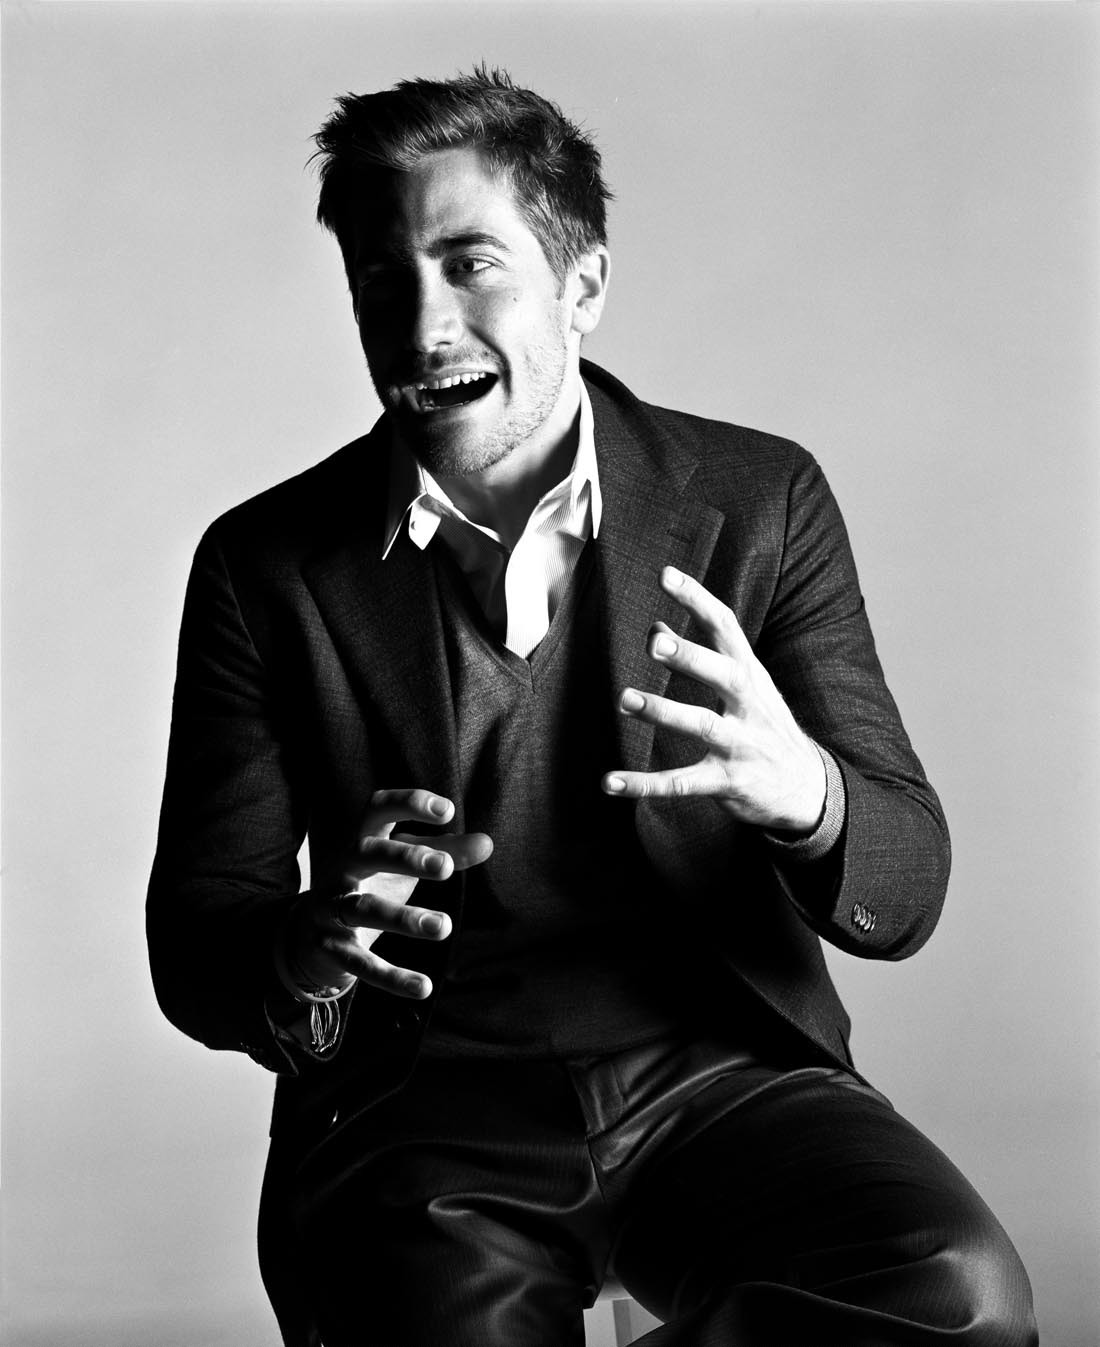 Jake Gyllenhaal photo 100 of 796 pics, wallpaper - photo #95307 - ThePlace2